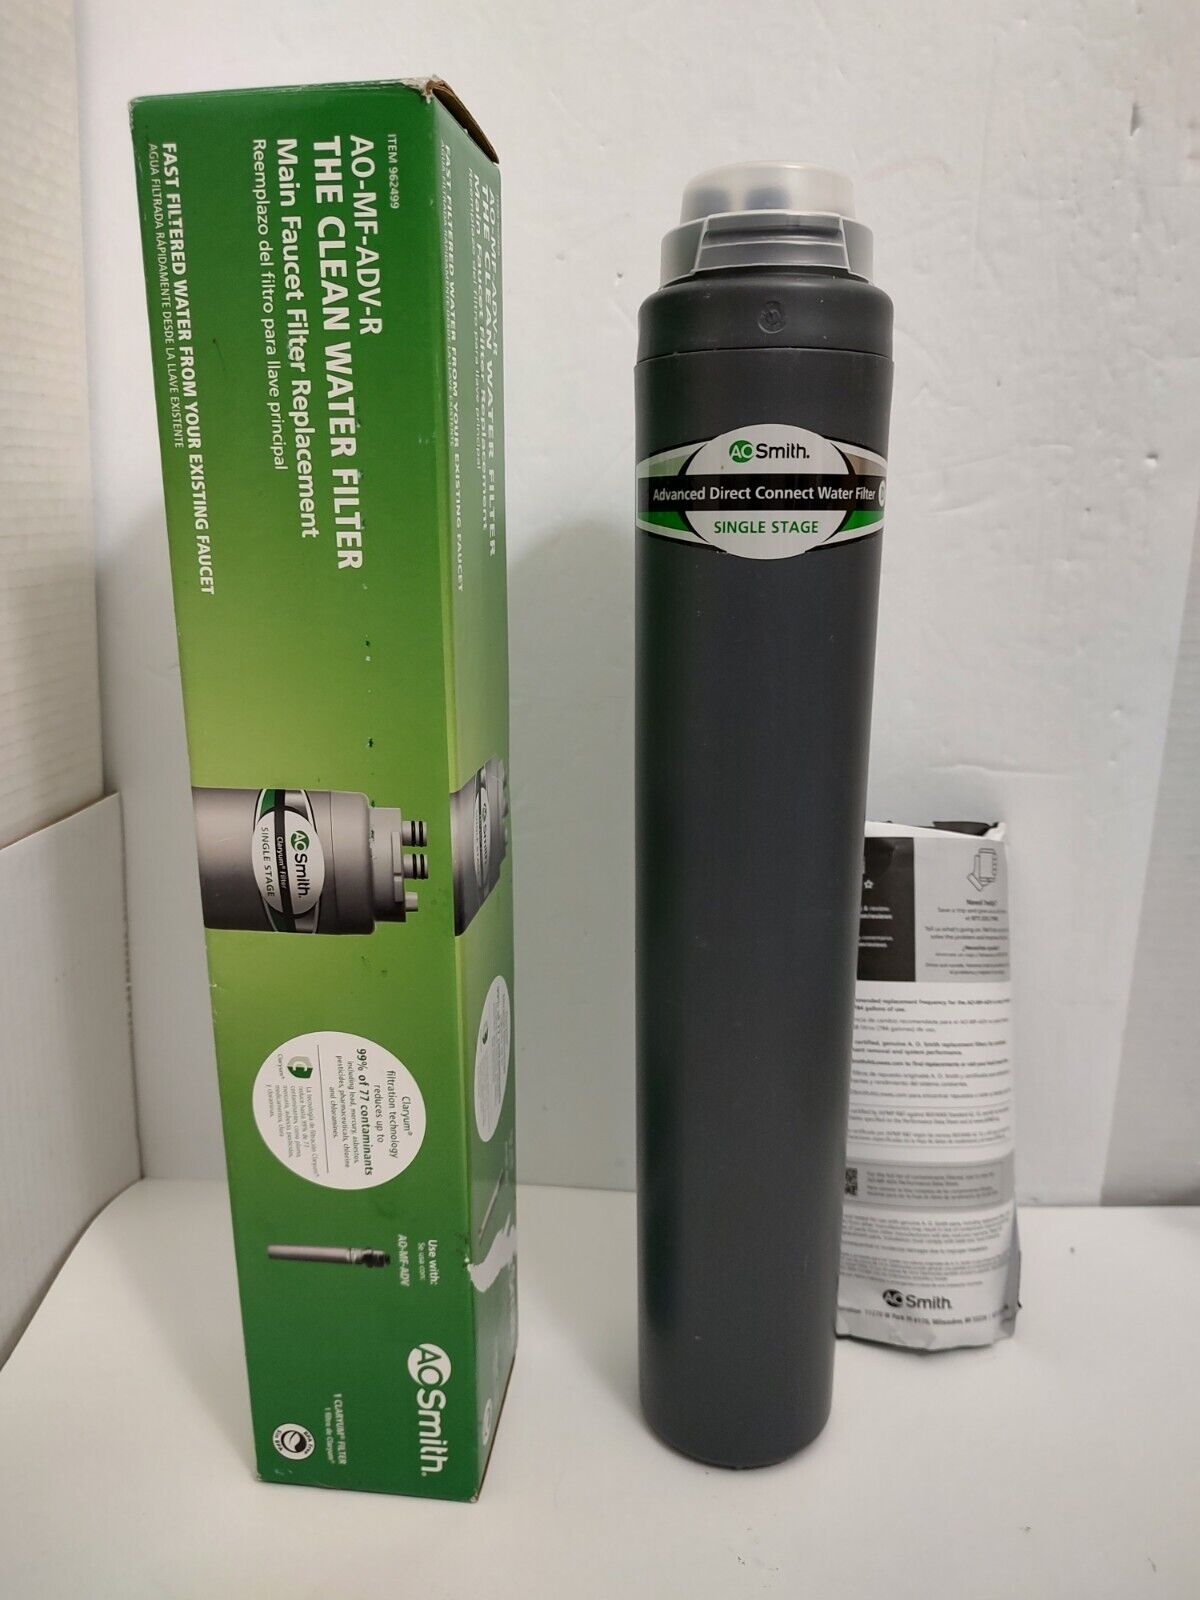 AO Smith Direct Connect Water Faucet Filter AO-MF-ADV-R 962499